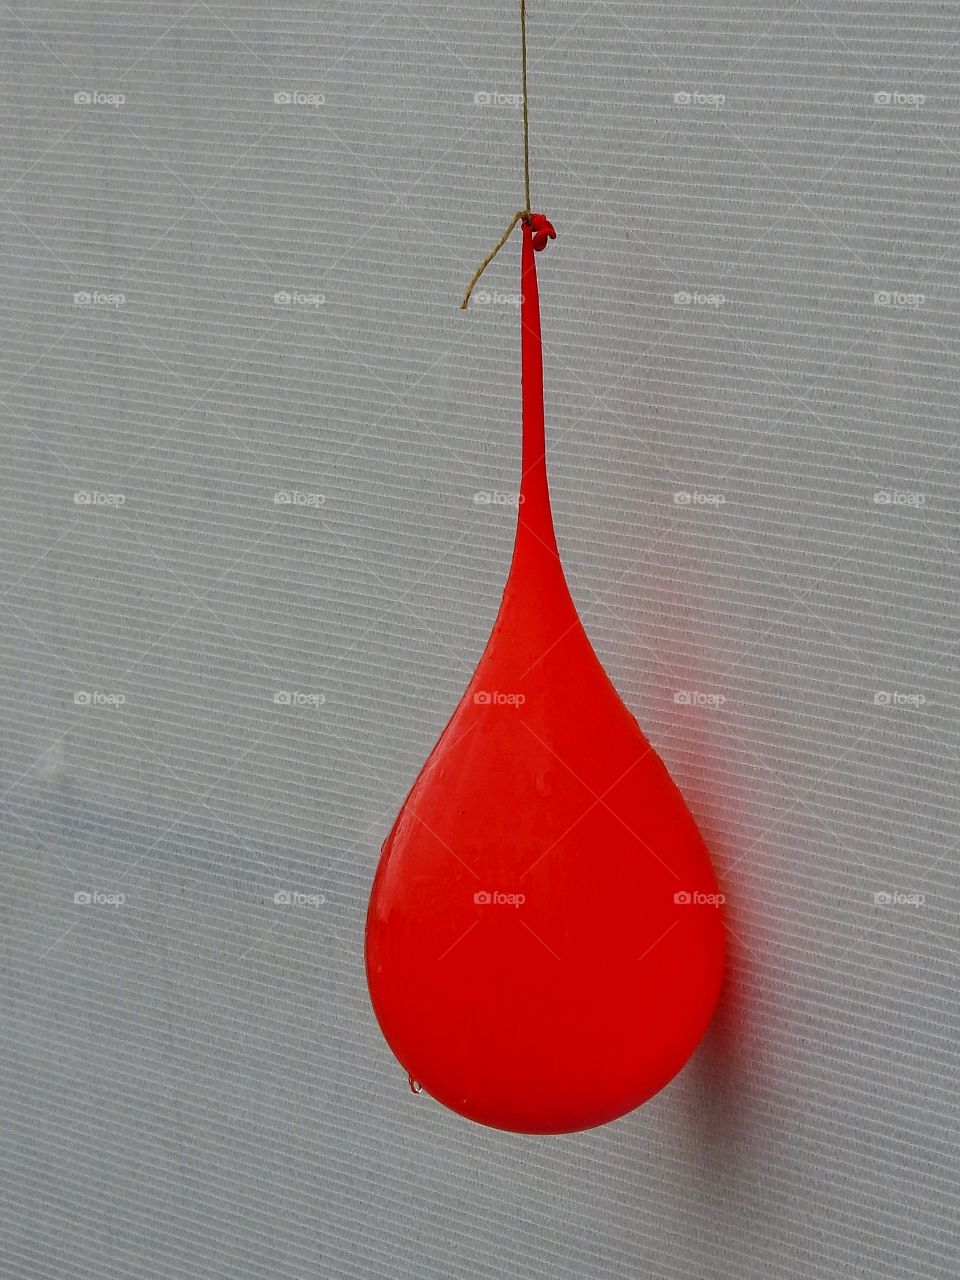 Red ballon on white wall